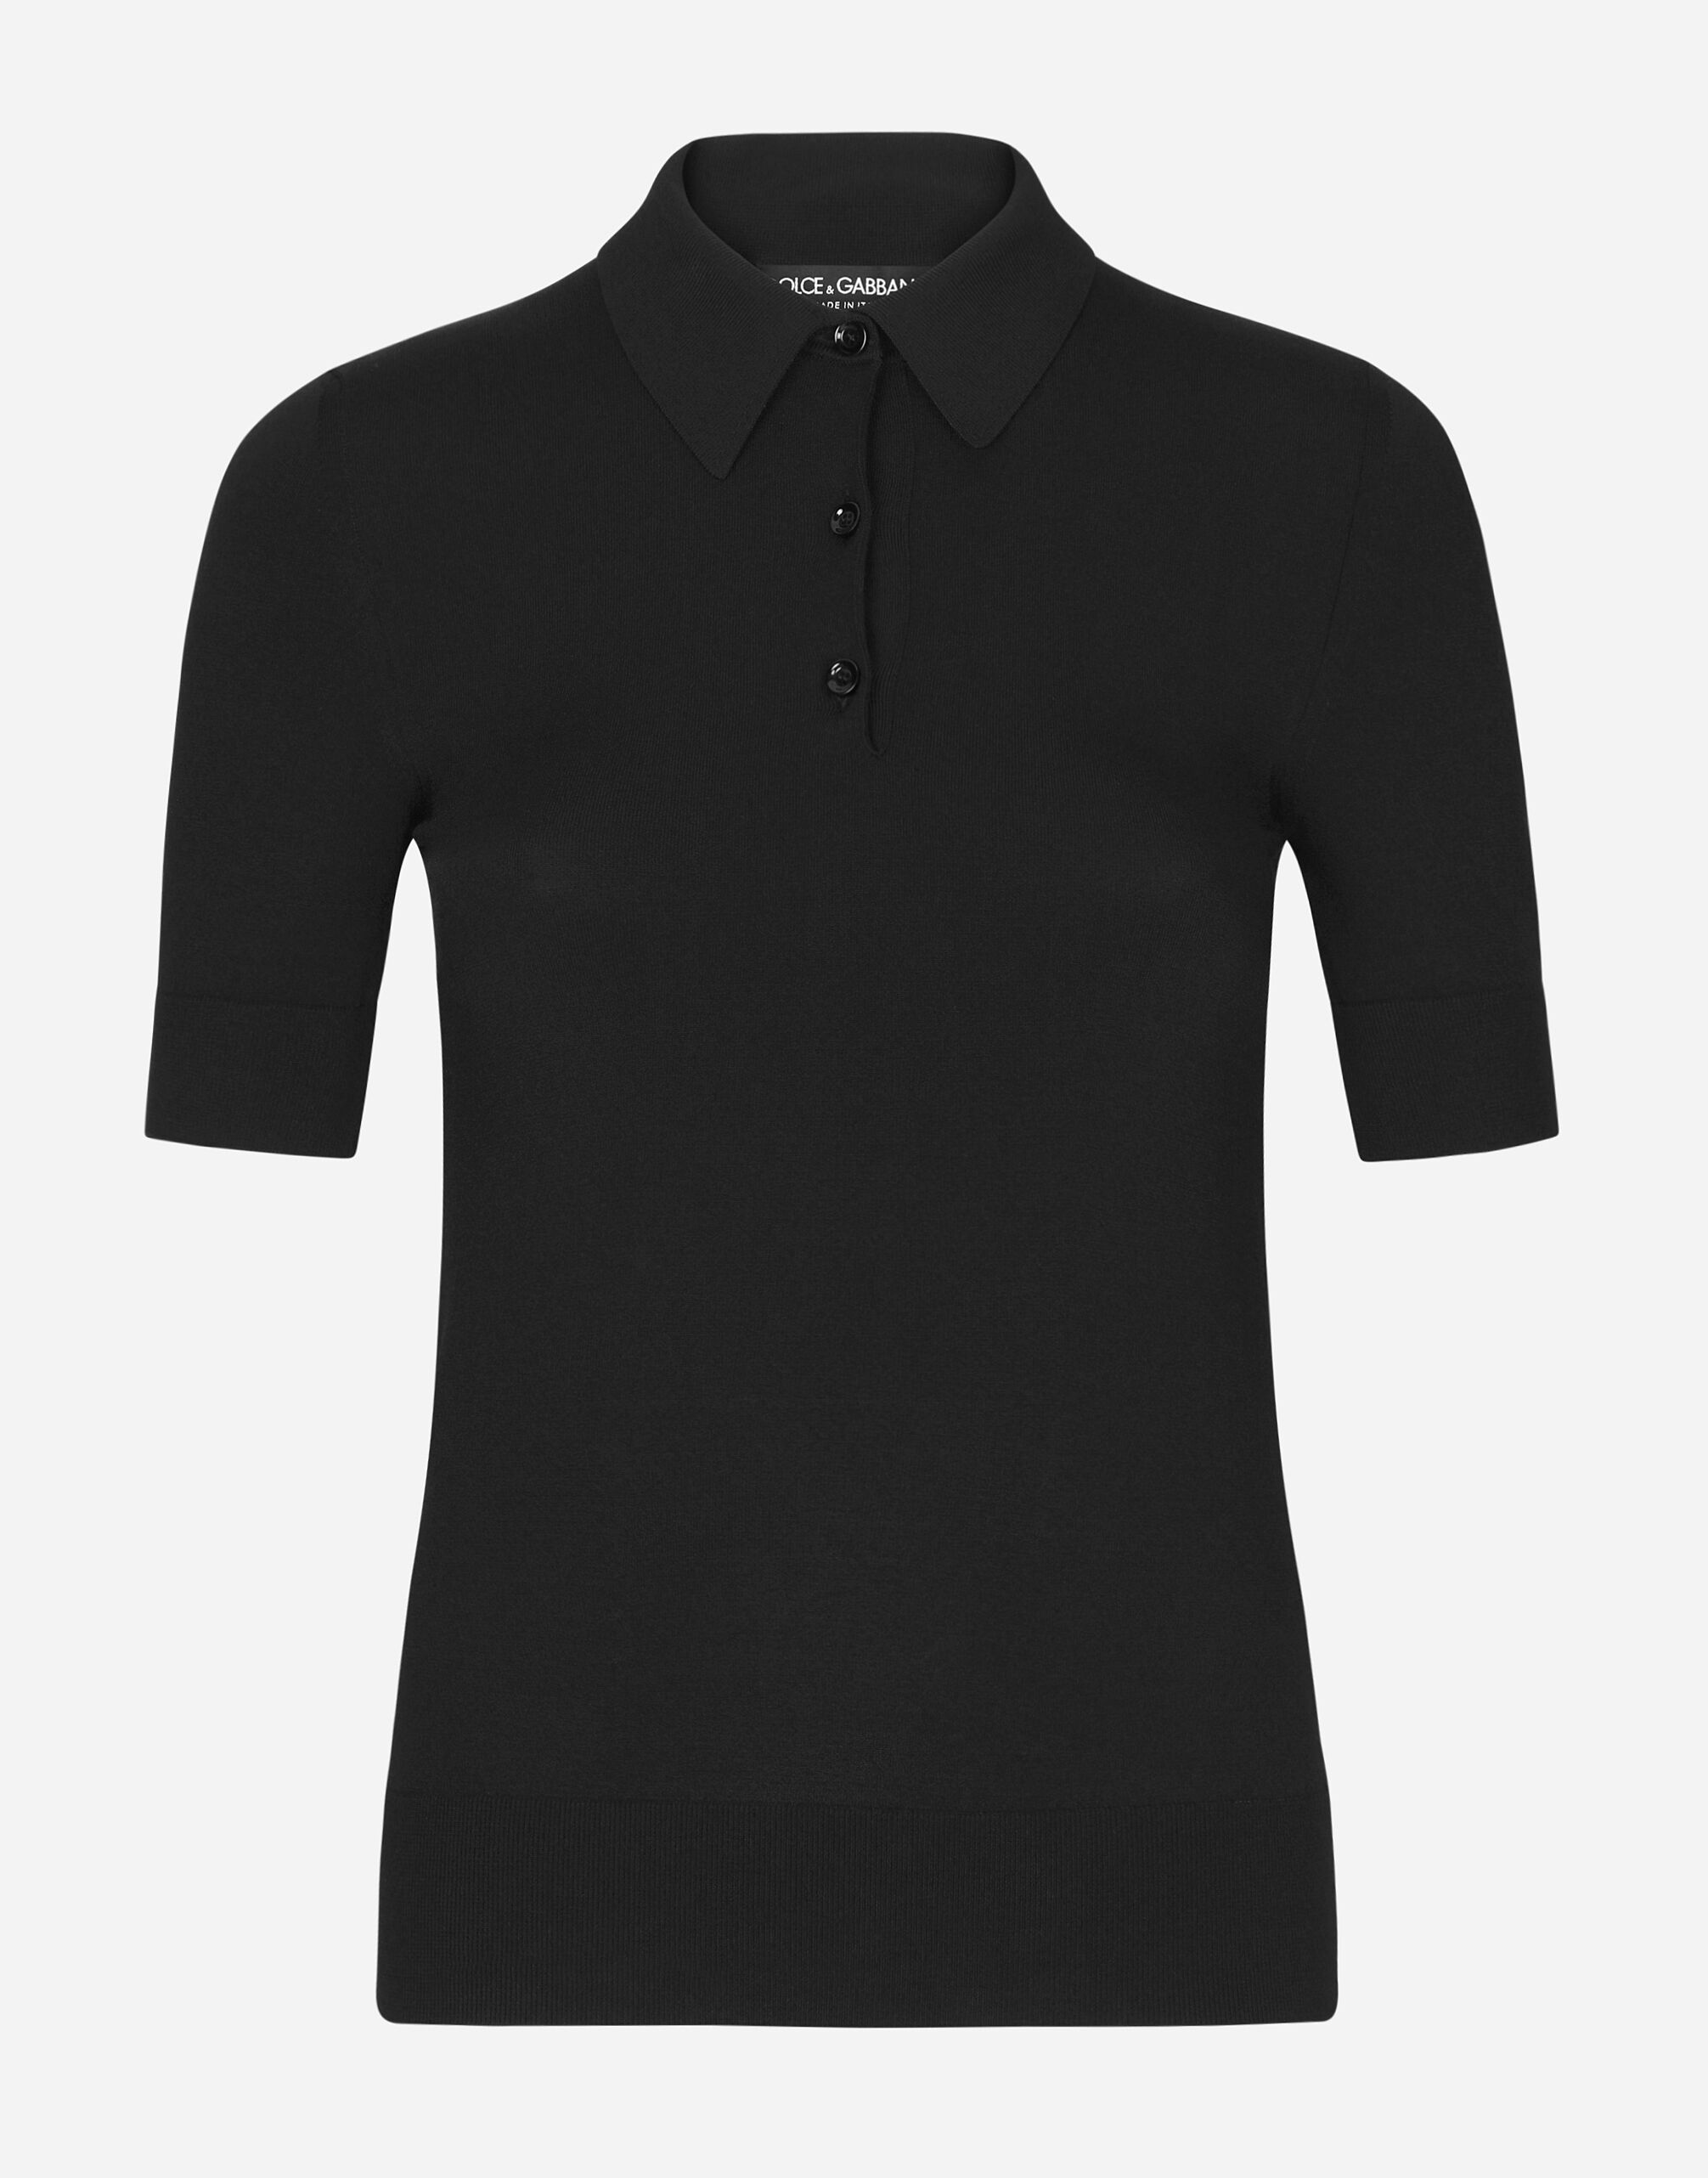 Dolce & Gabbana ビスコース ポロシャツ ブラック FXE03TJBMQ3